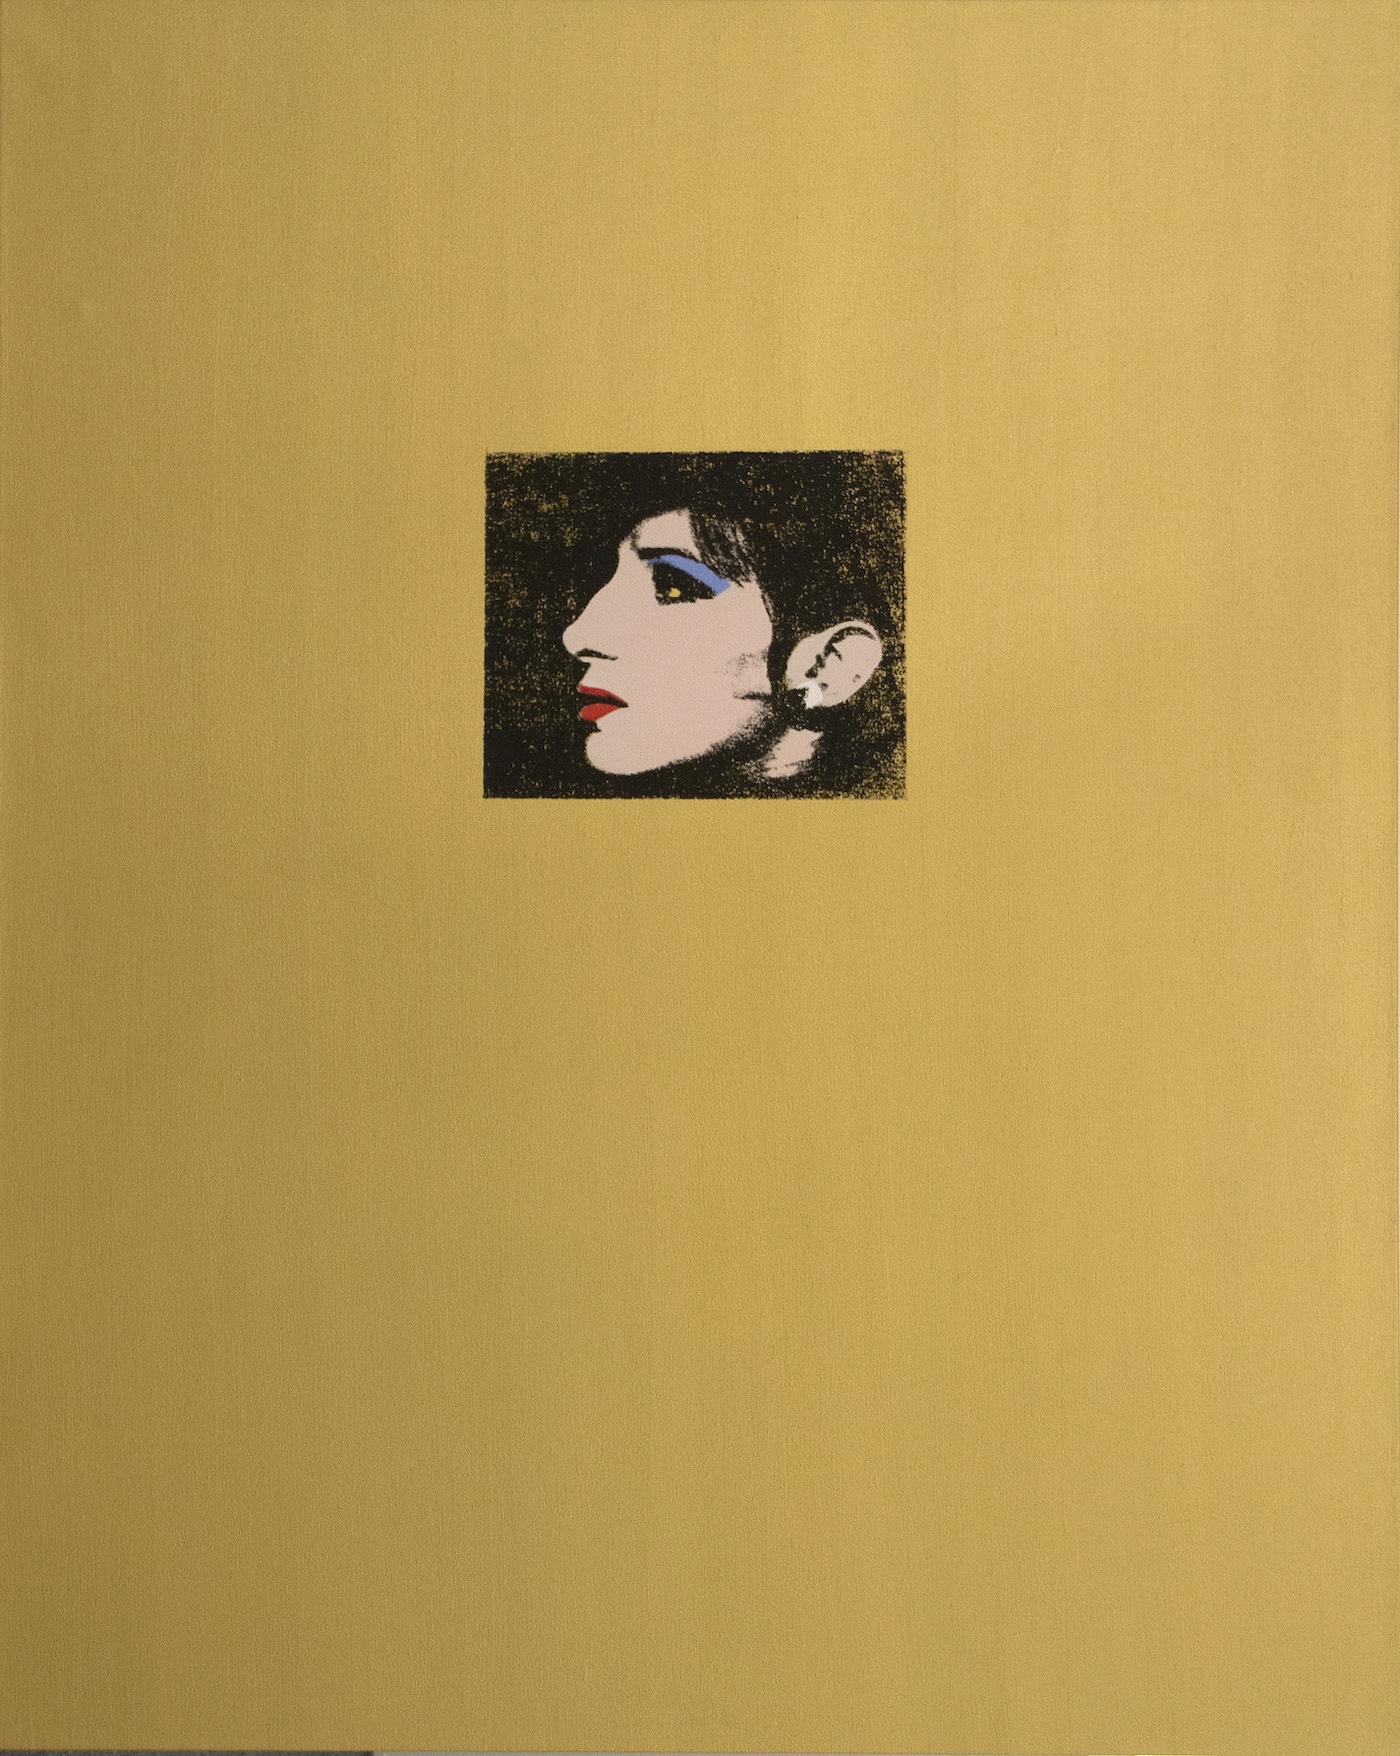 Deborah Kass, “Gold Barbra” (1992), silkscreen and acrylic on canvas, 72 x 60 inches (courtesy Artist Rights Society/ ARS and Kavi Gupta Gallery)